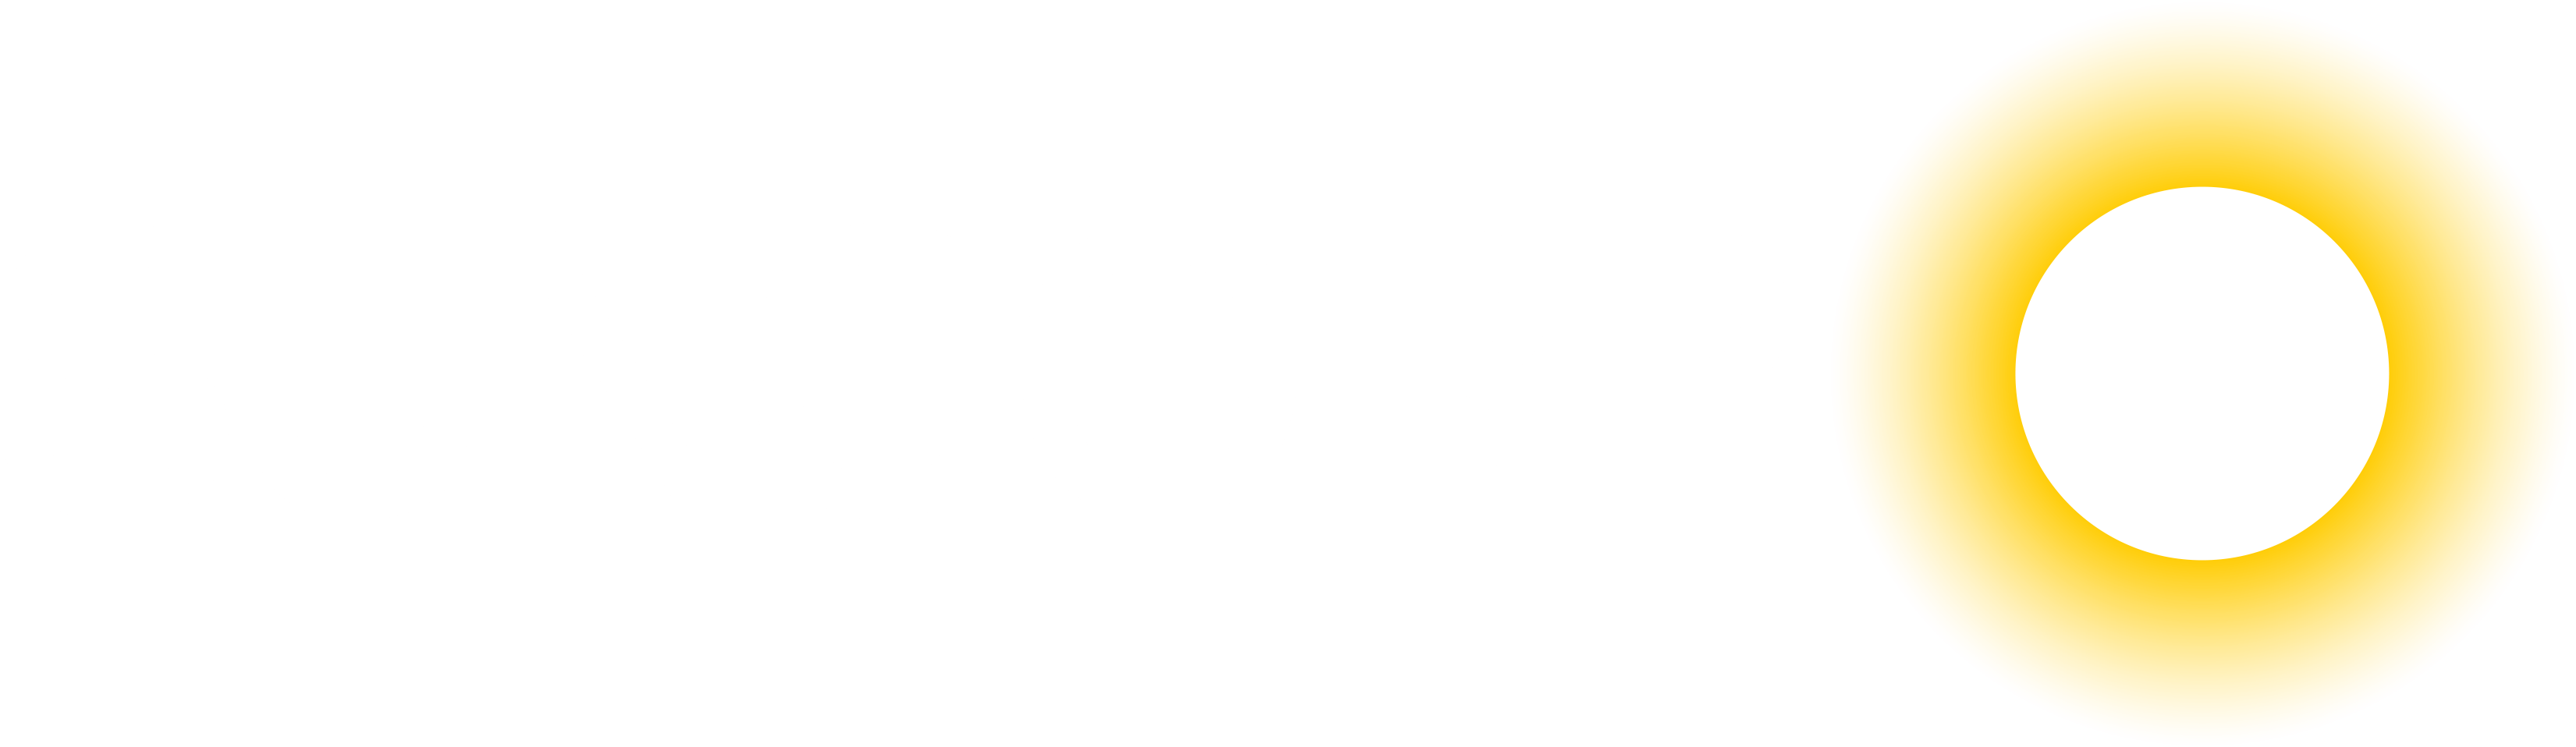 Suncorp Logo - Suncorp Benefits